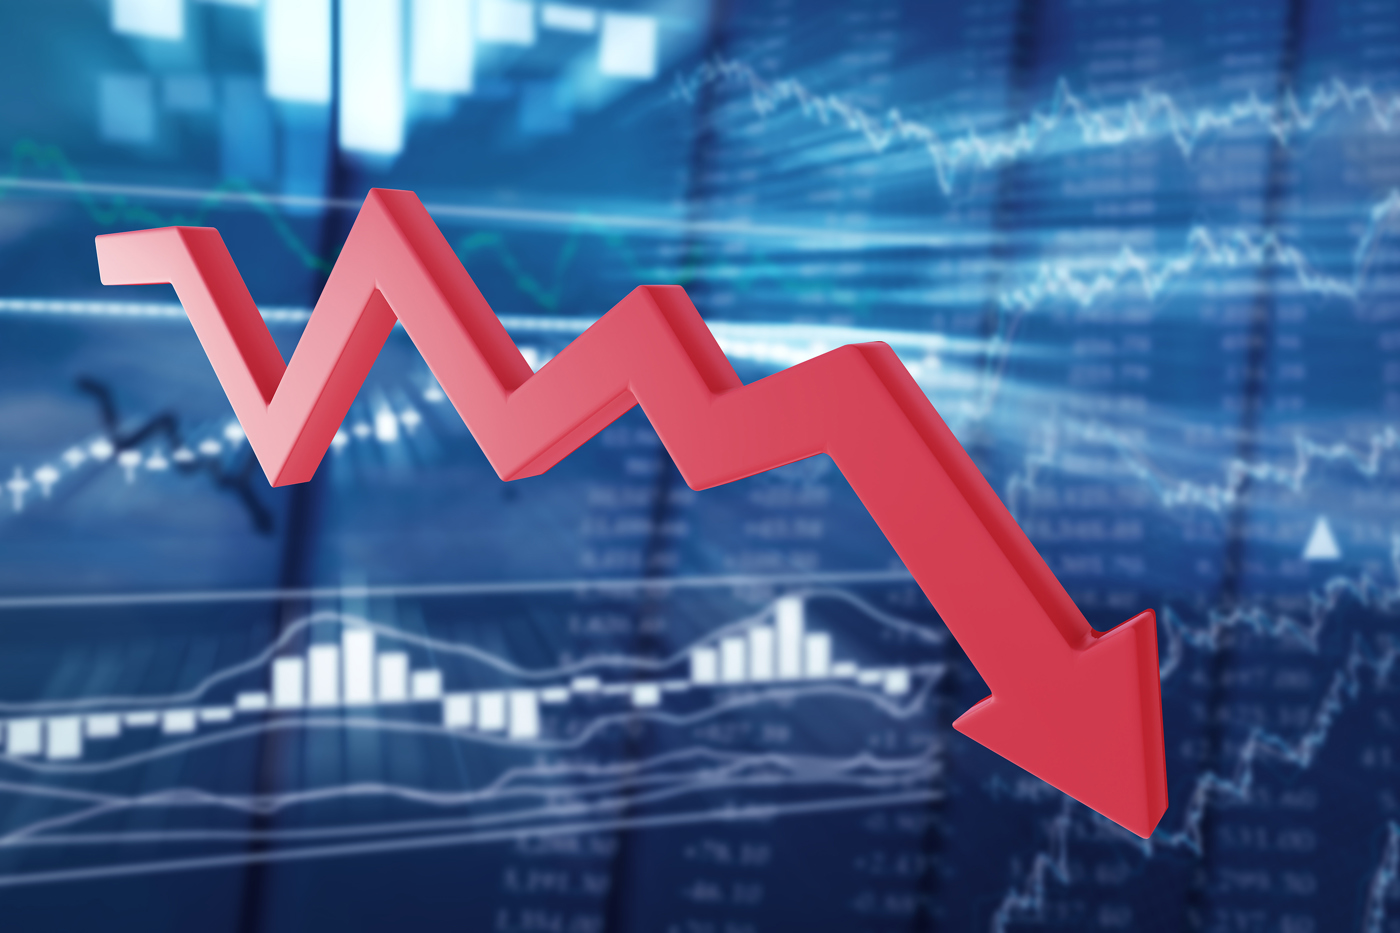 Stock downtrend, stock price drop, bearish run, stock drop